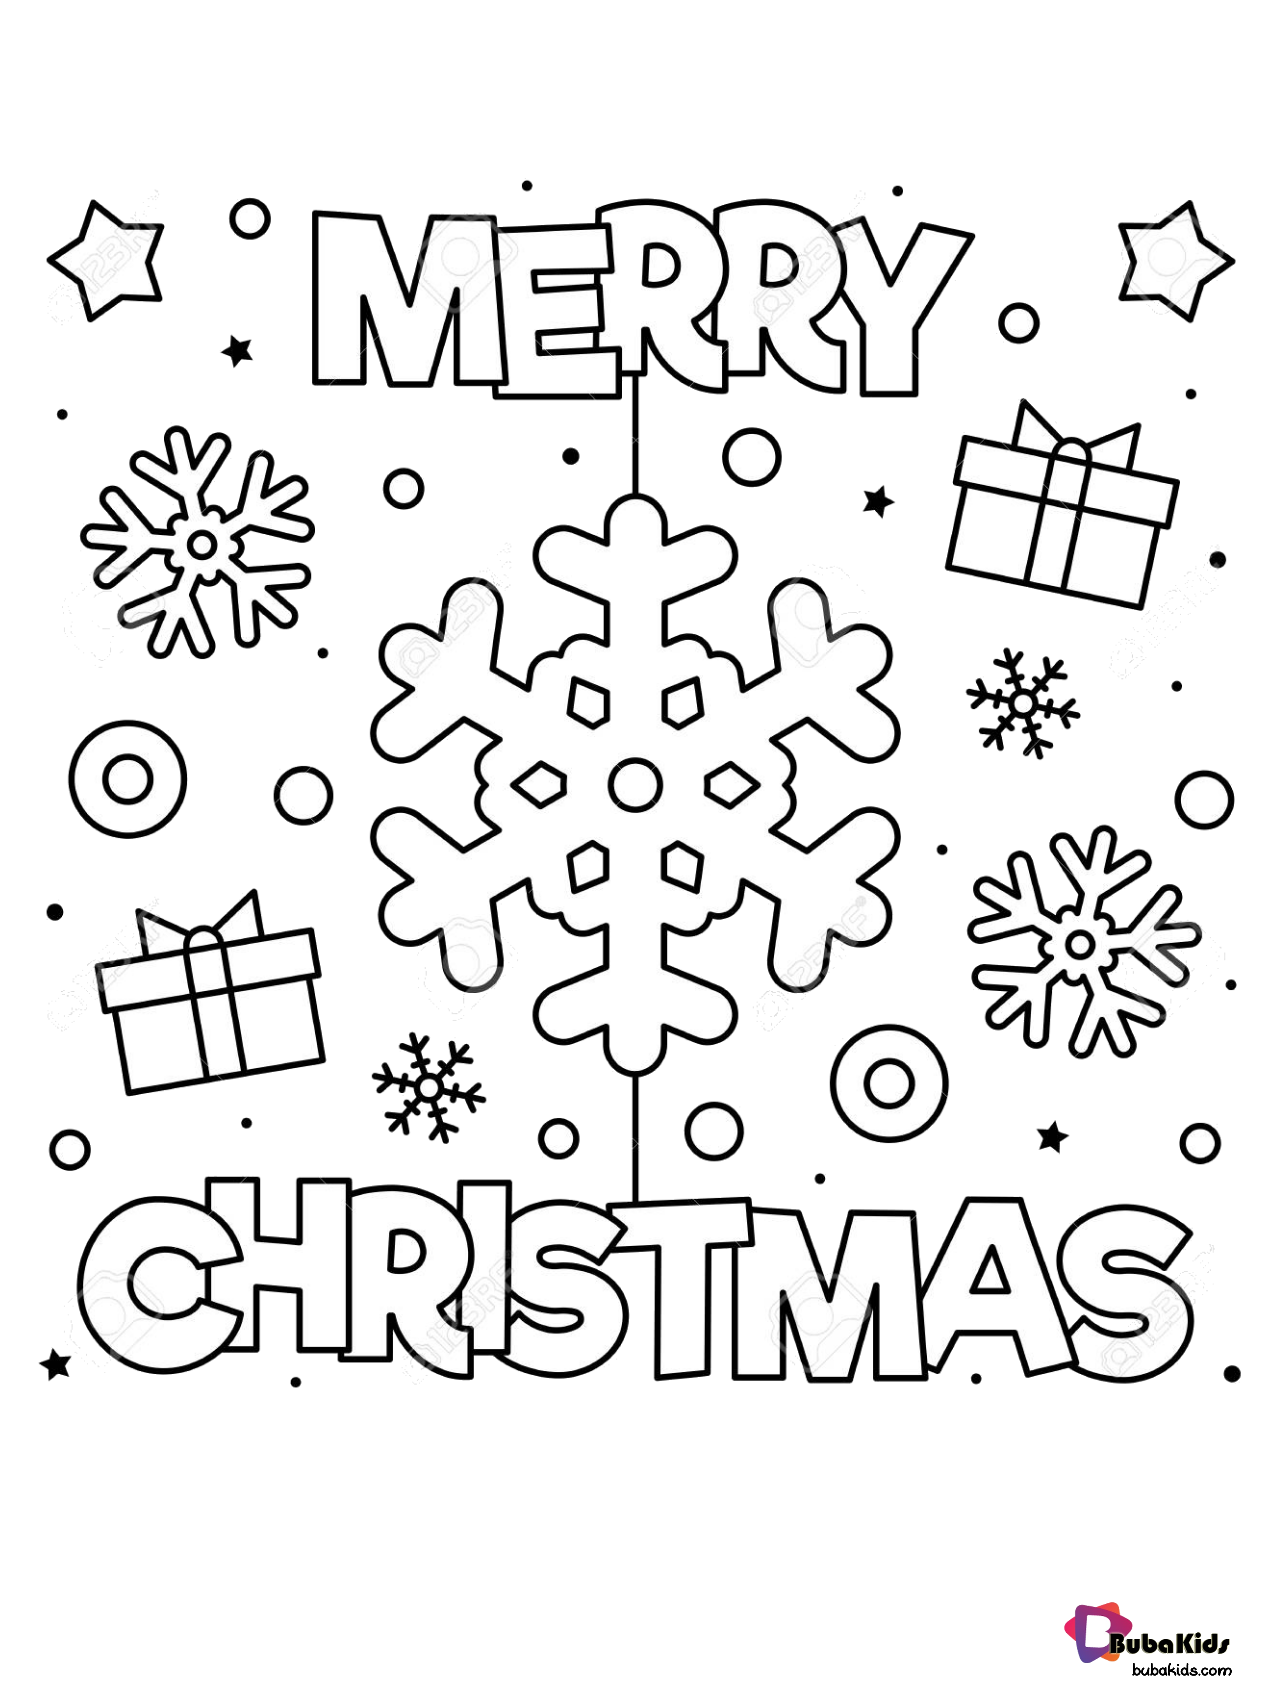 Merry Christmas printable coloring page. Wallpaper